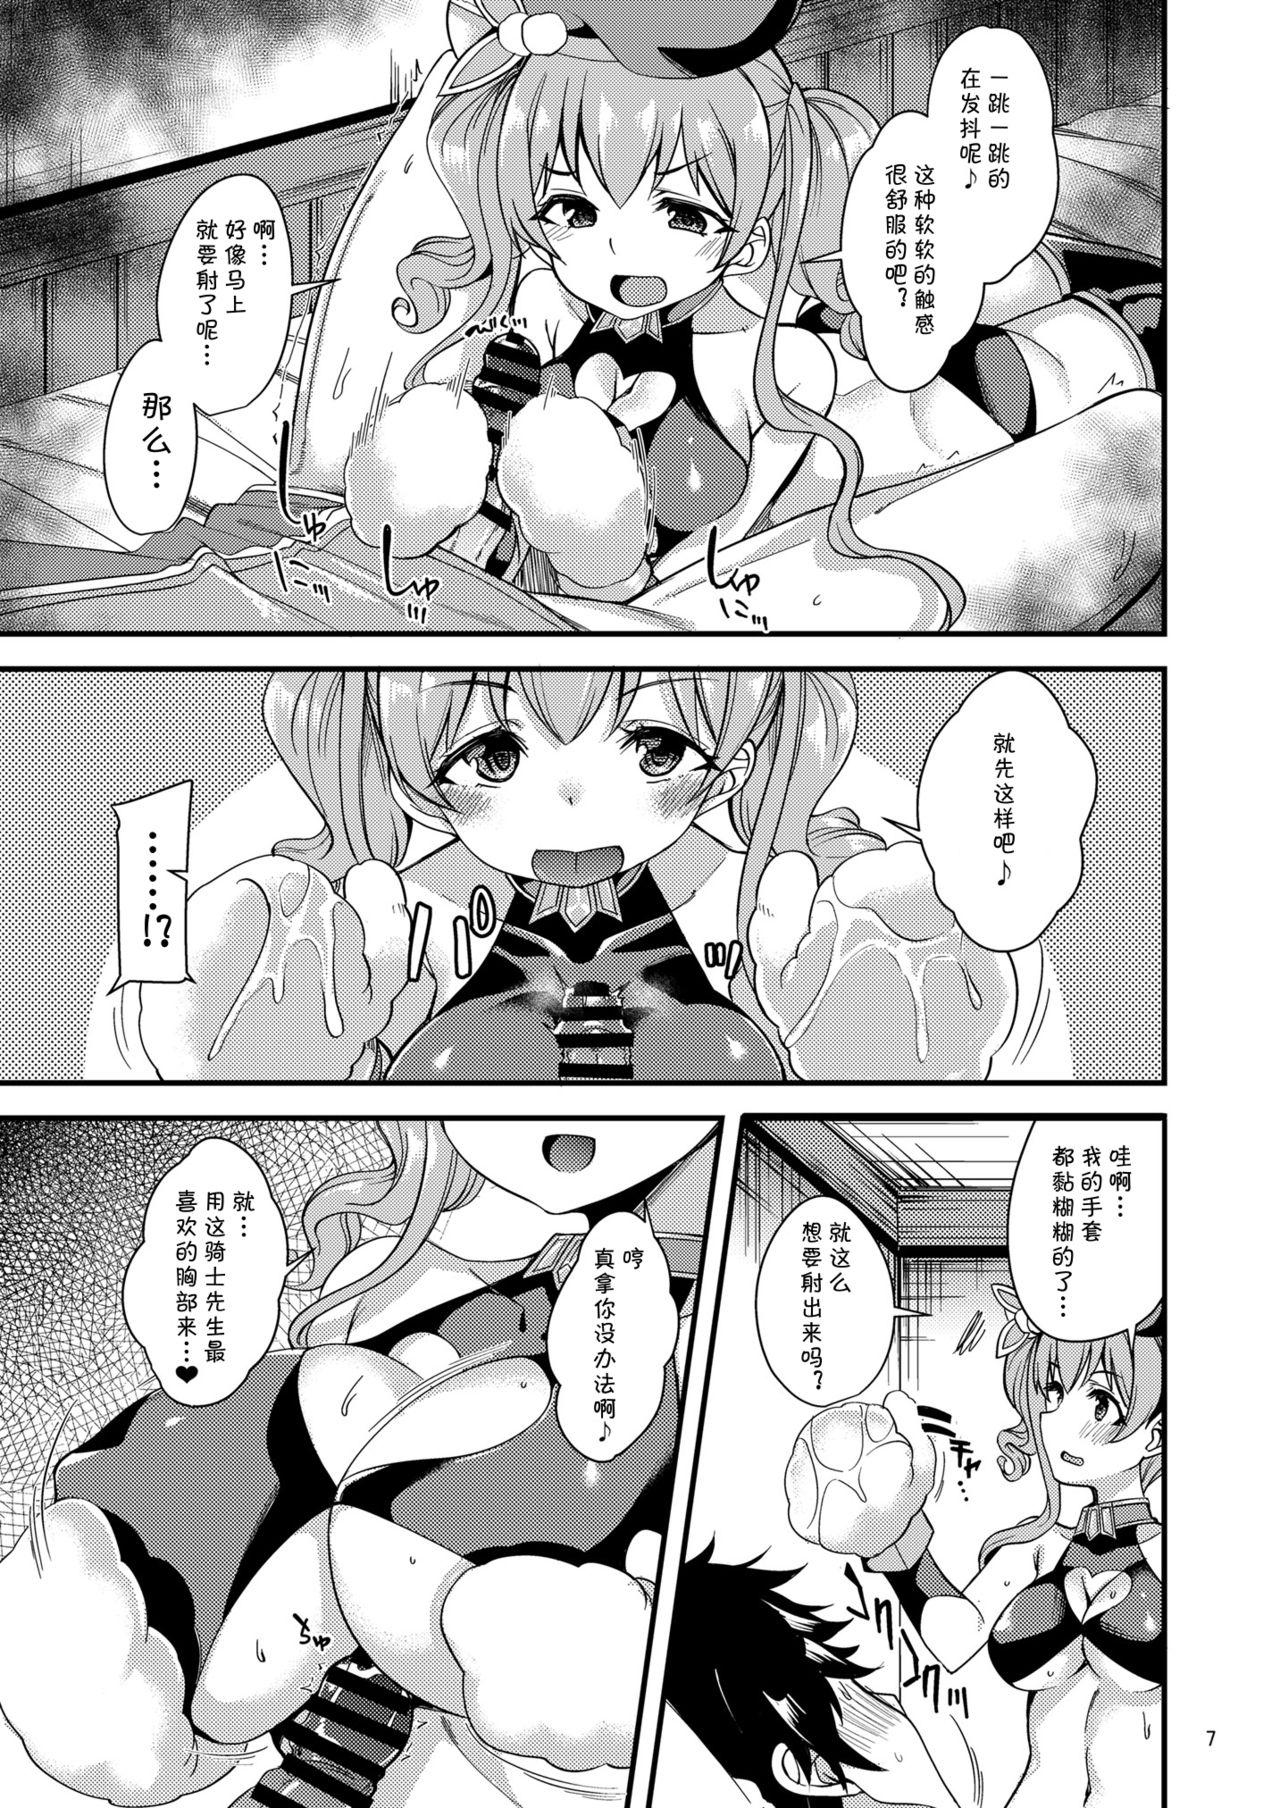 Boobies Tsumugi Make Heroine Move!! 04 - Princess connect And - Page 8